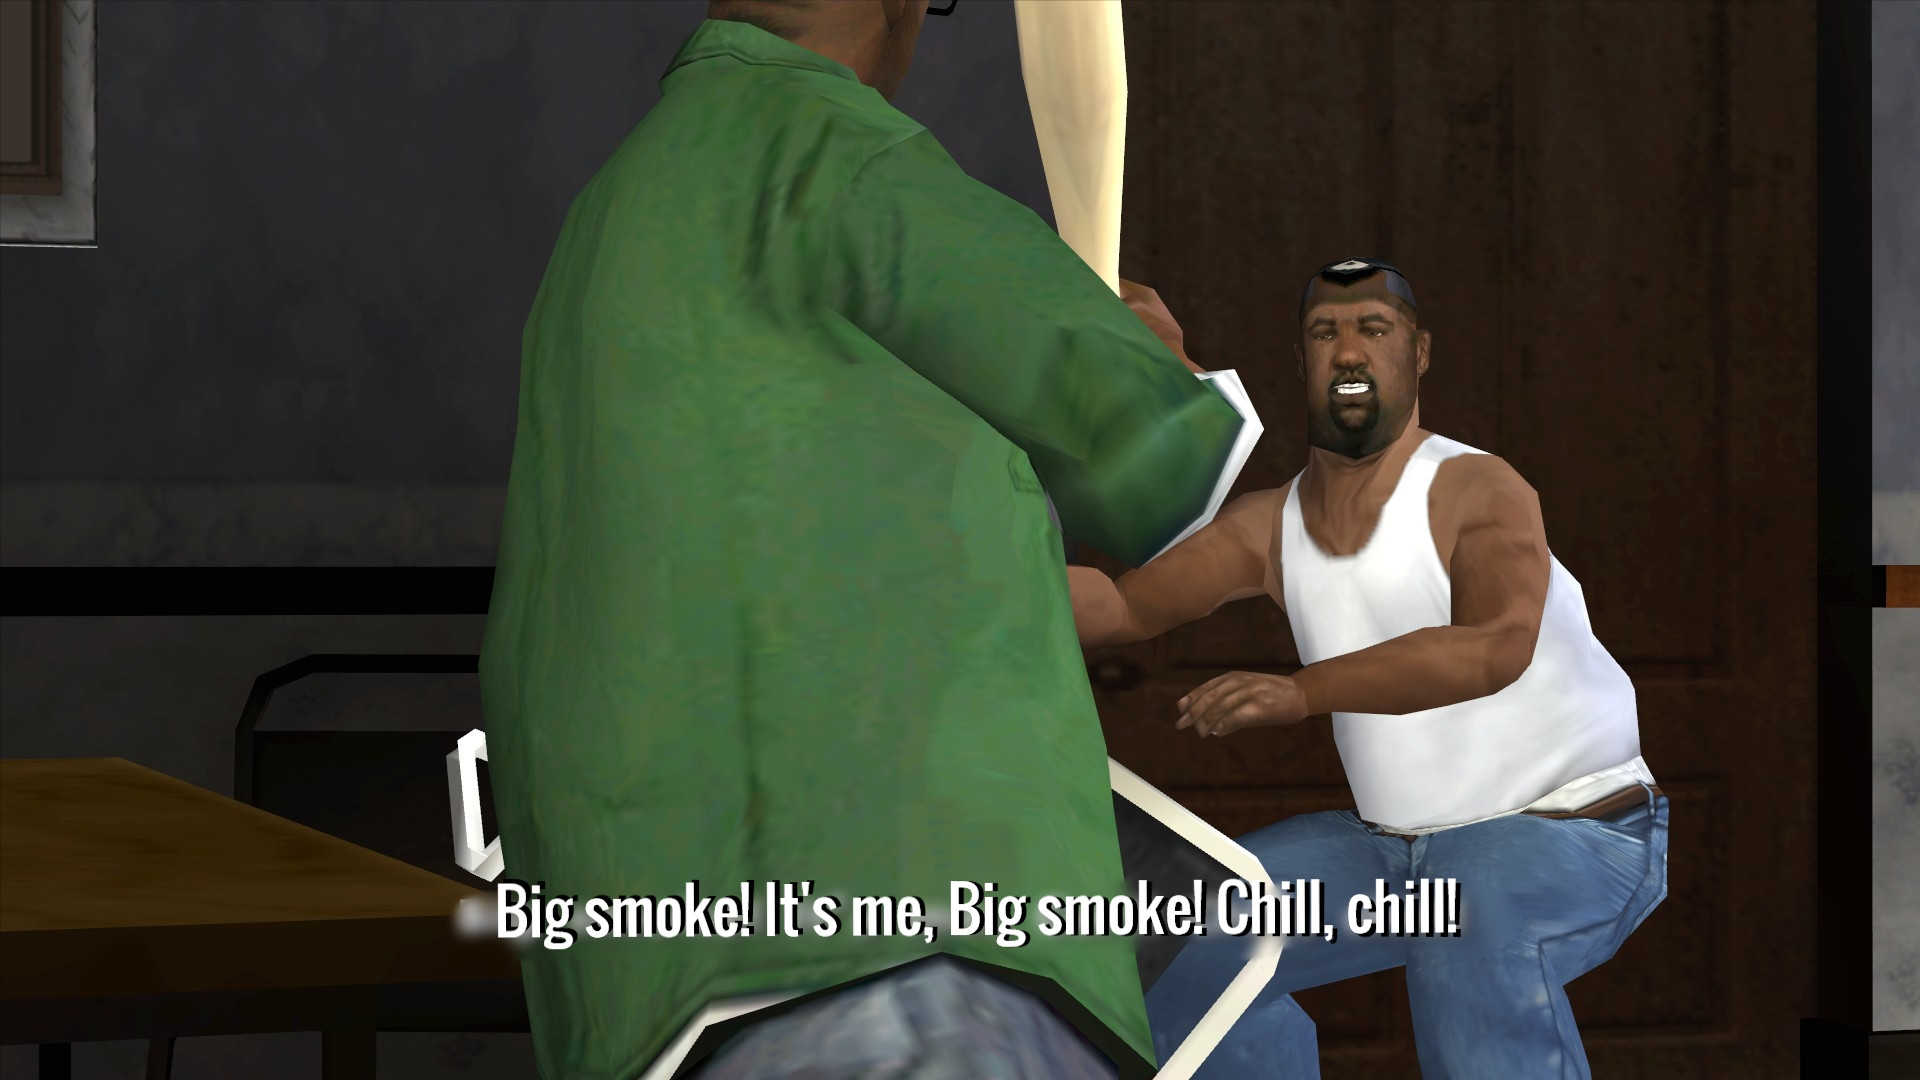 Big smoke threesome meme